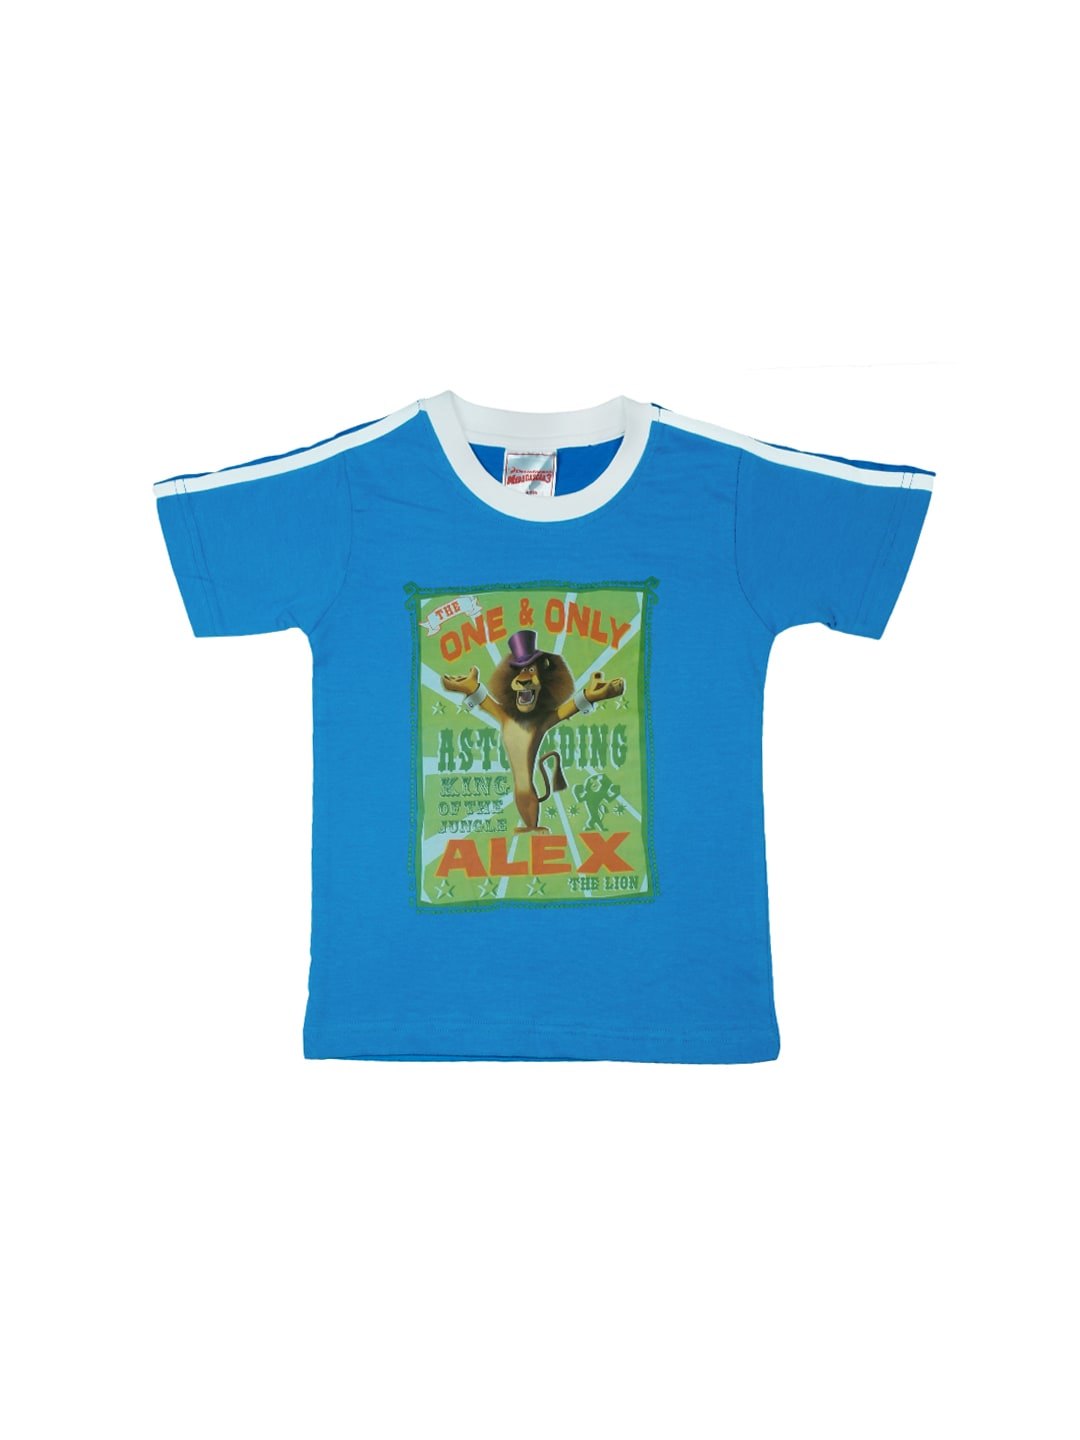 Madagascar3 Boys Printed Blue T-Shirt